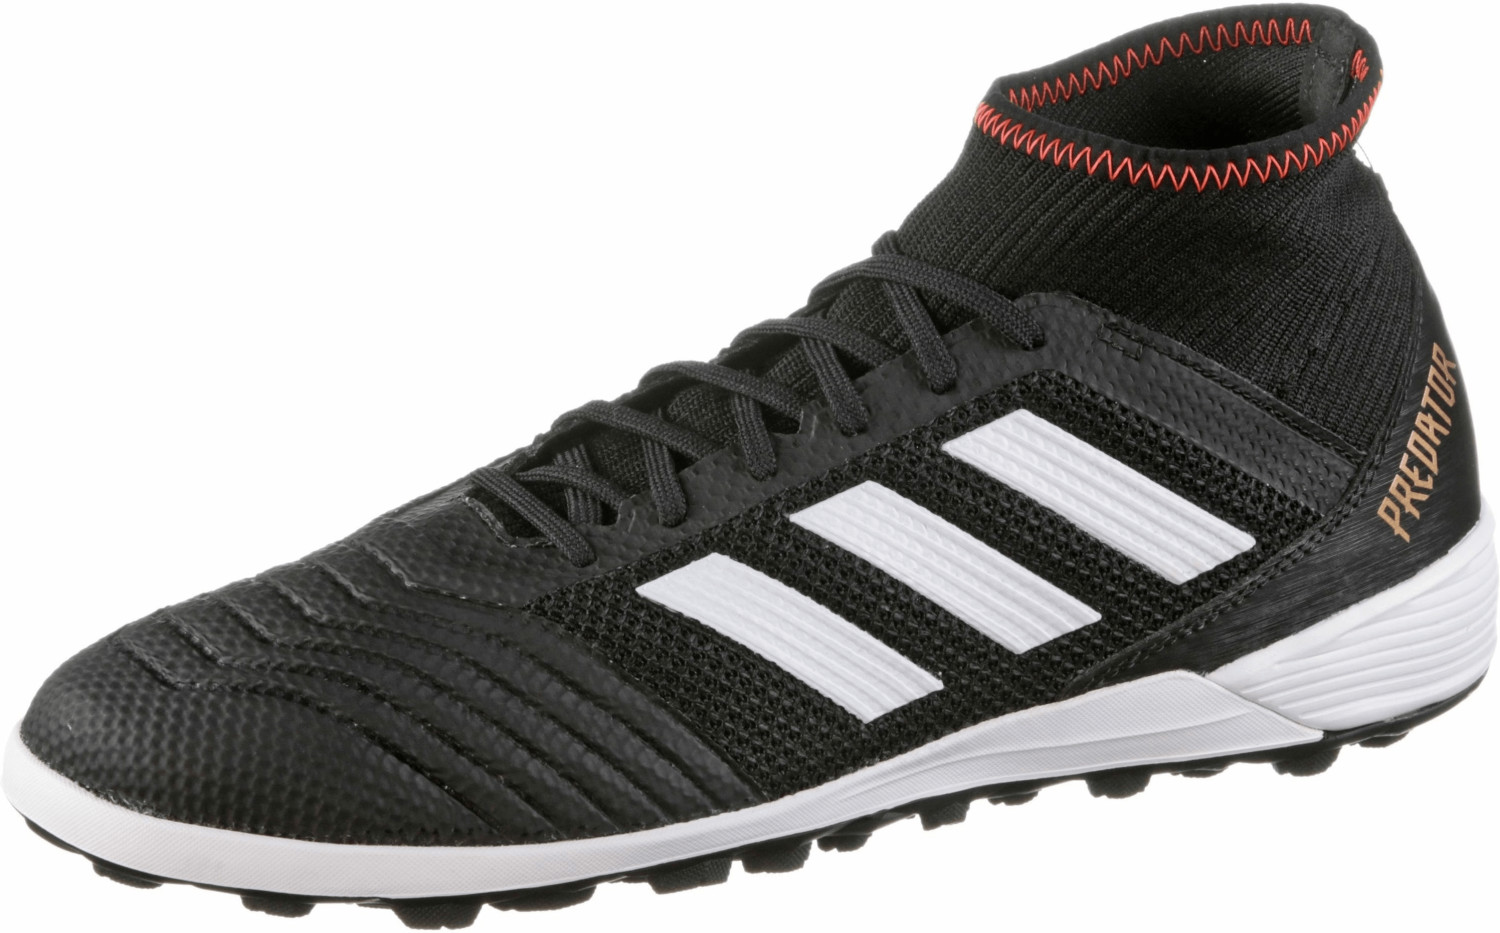 Adidas Predator Tango 18.3 TF core black/footwear white/solar red